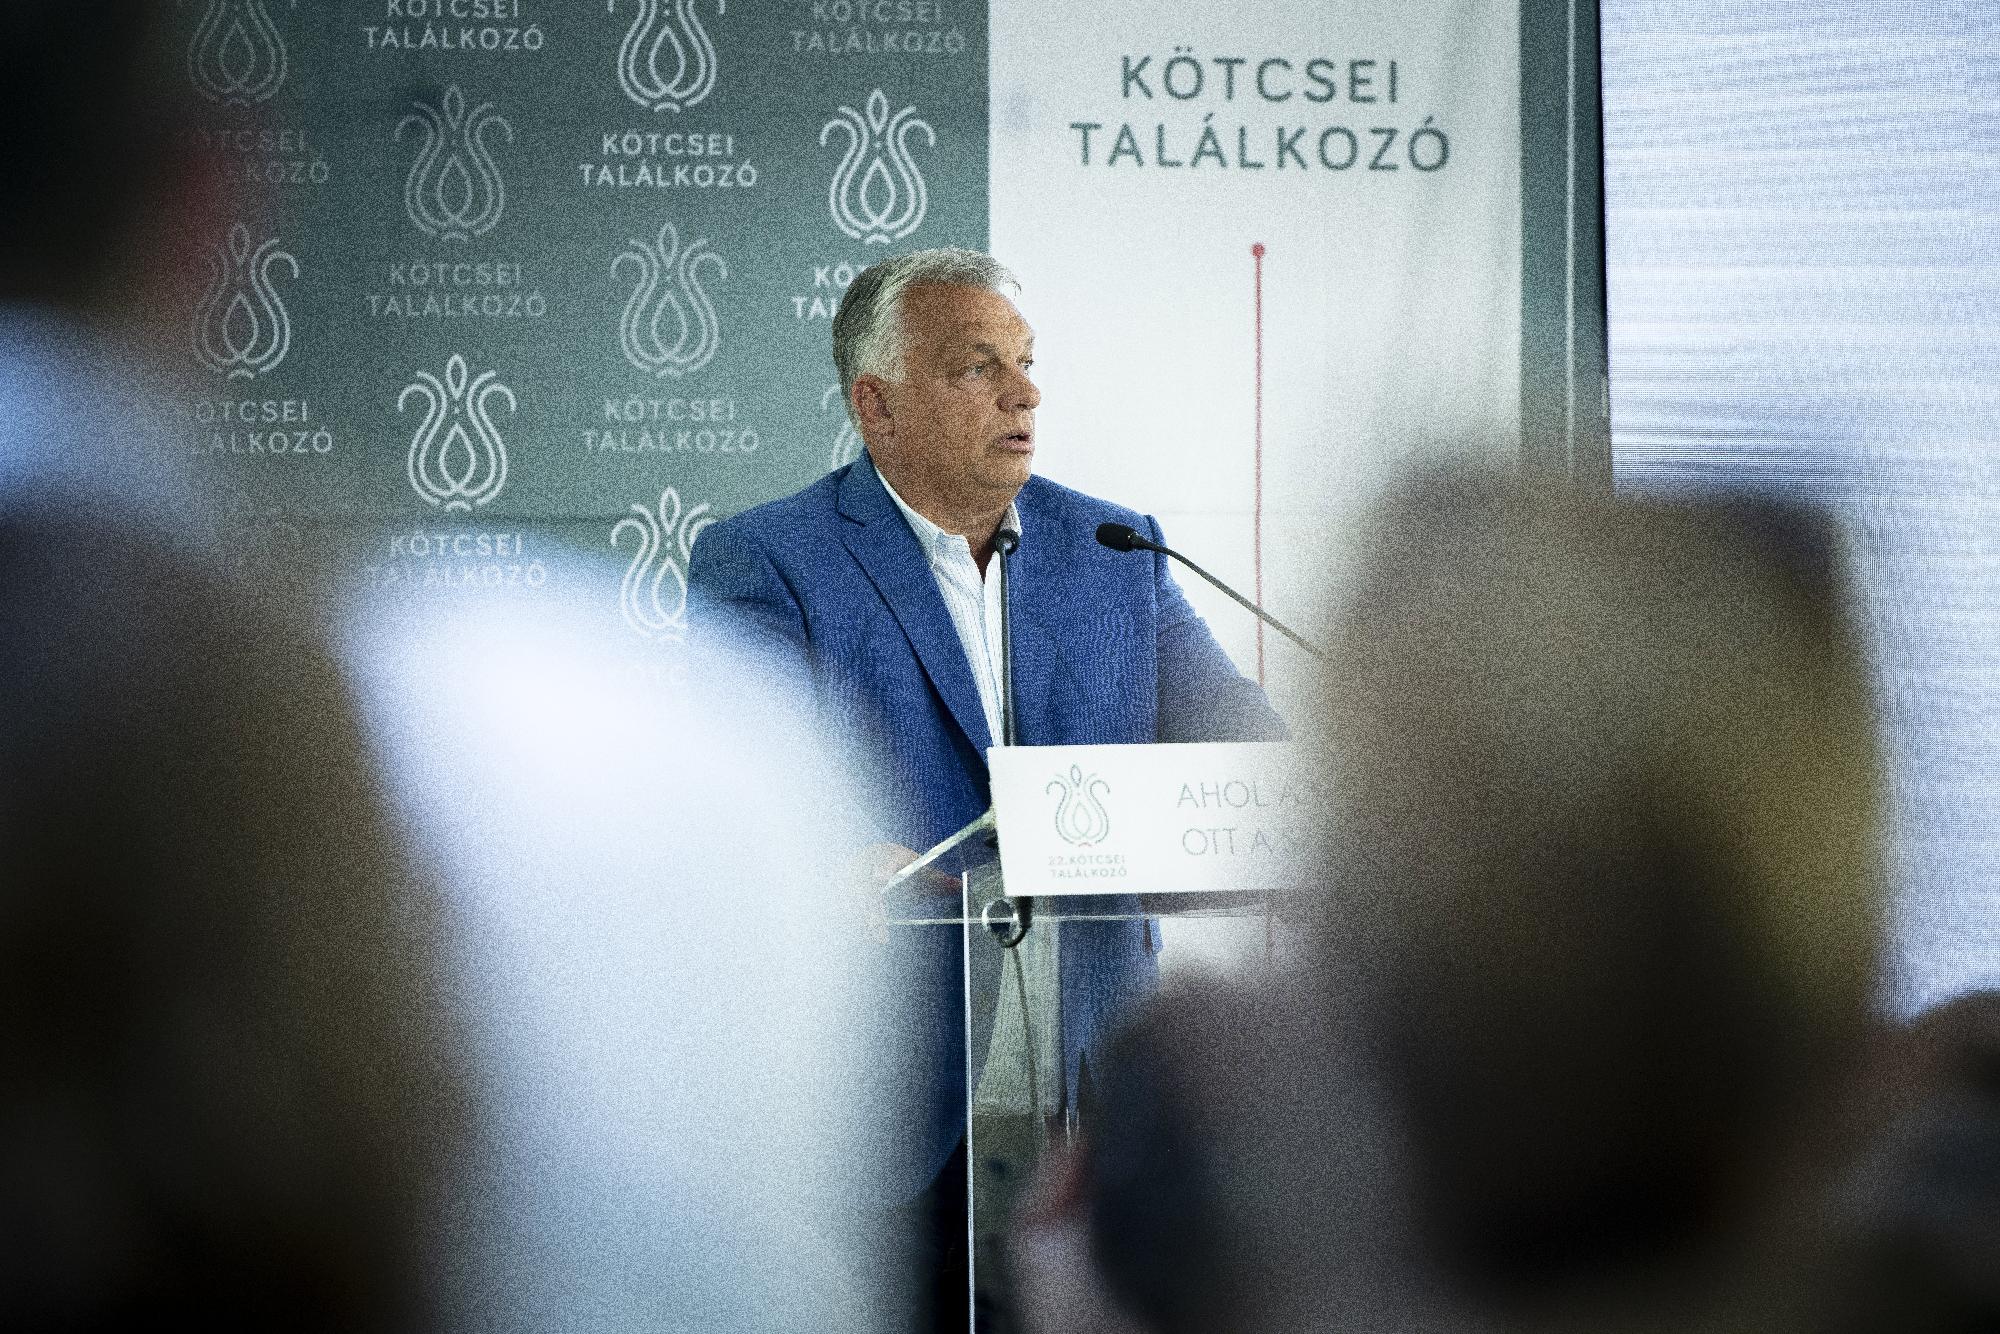 22. alkalommal tartott beszédet Orbán Viktor Kötcsén